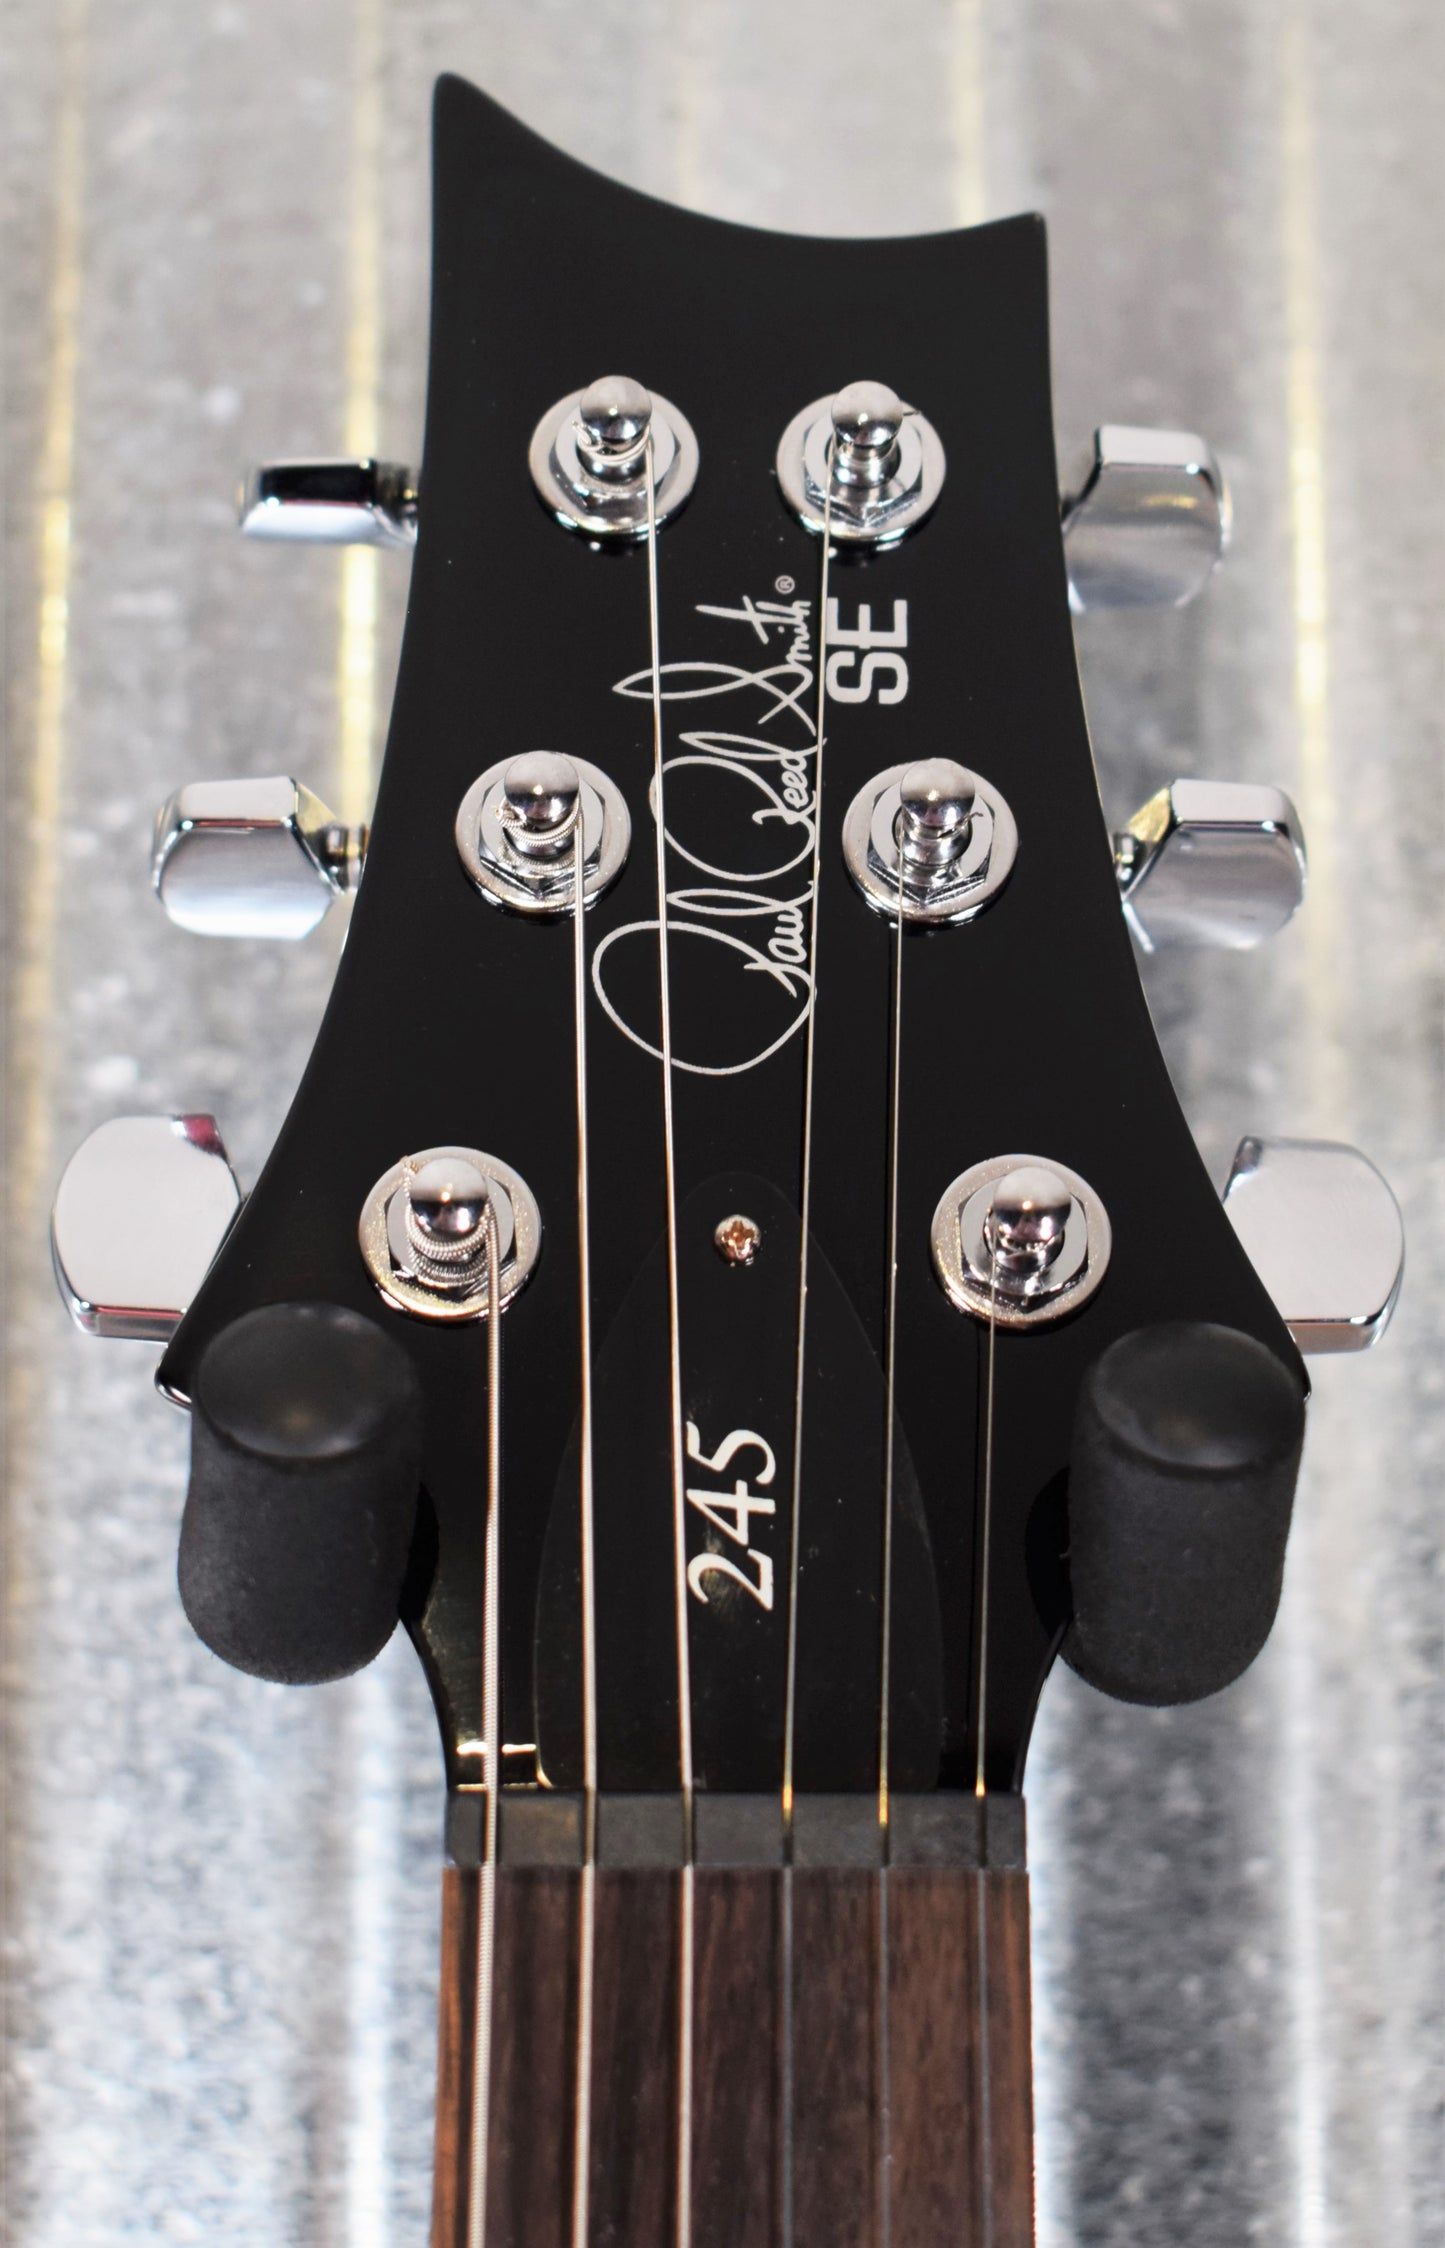 PRS Paul Reed Smith SE 245 Charcoal Burst Guitar & Bag #3953